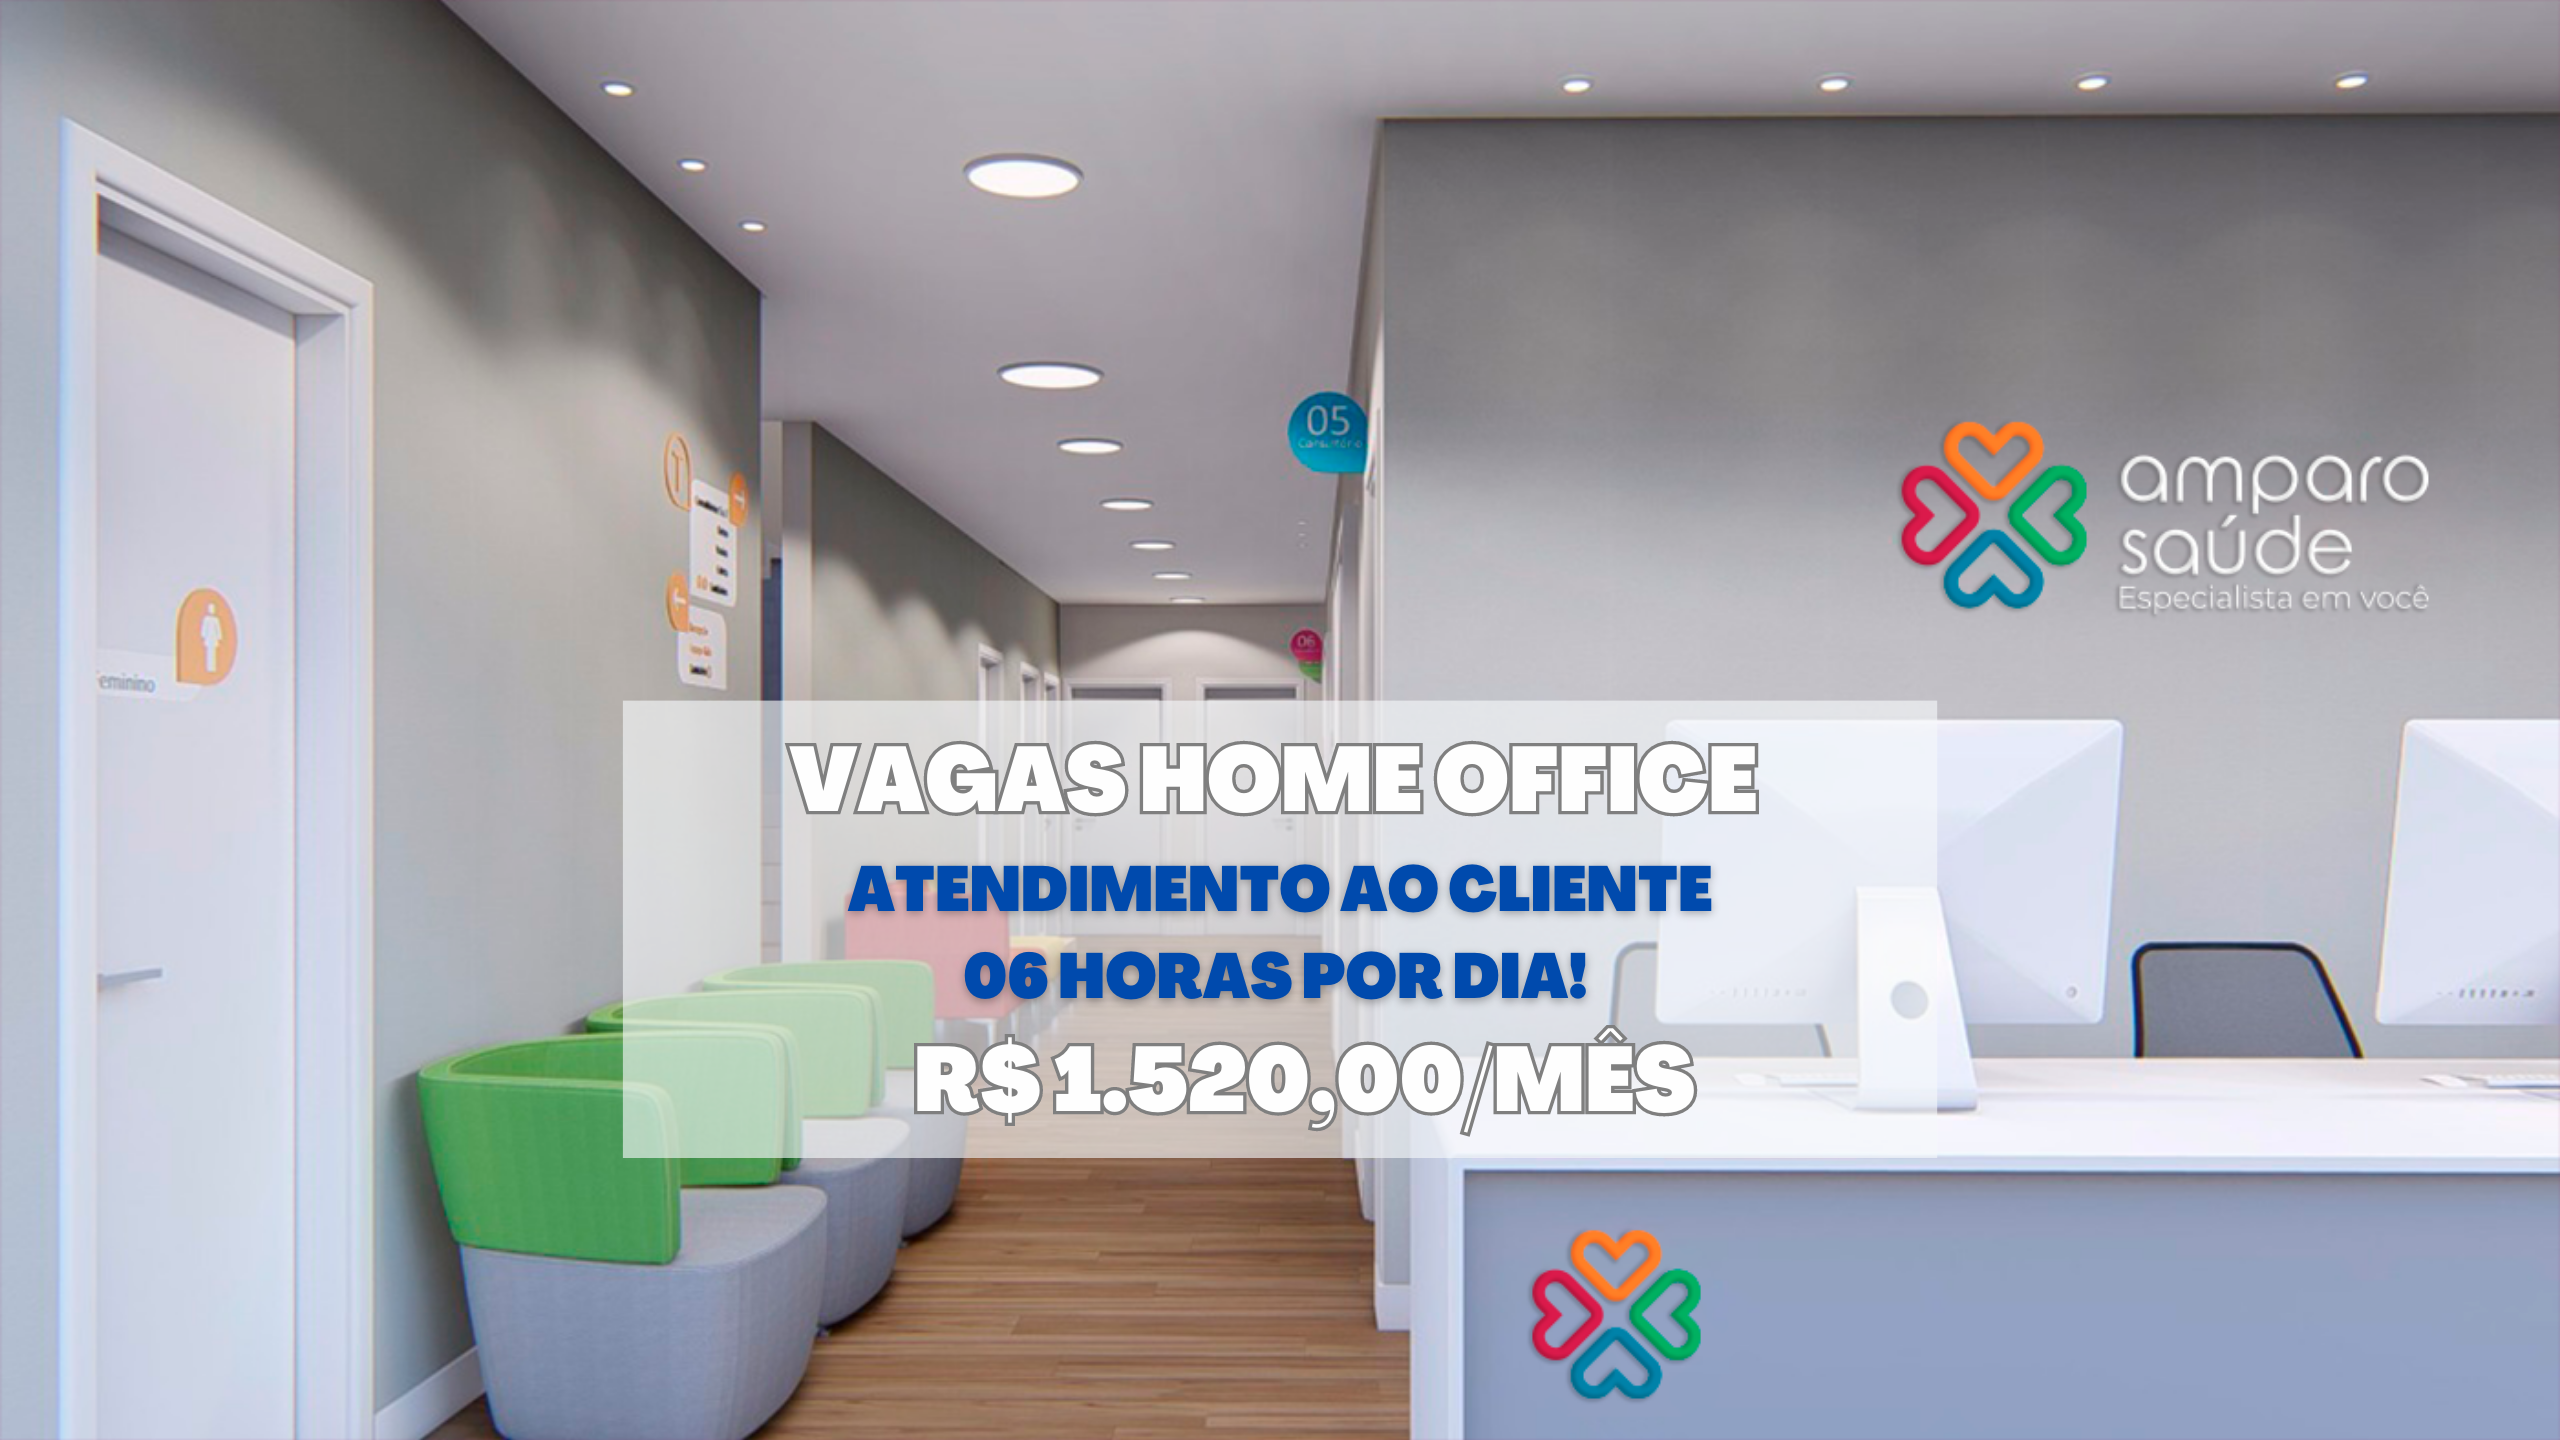 Trabalhe de Casa! A Amparo Saúde abre vagas HOME OFFICE para Atendimento ao cliente 06 HORA POR DIA.